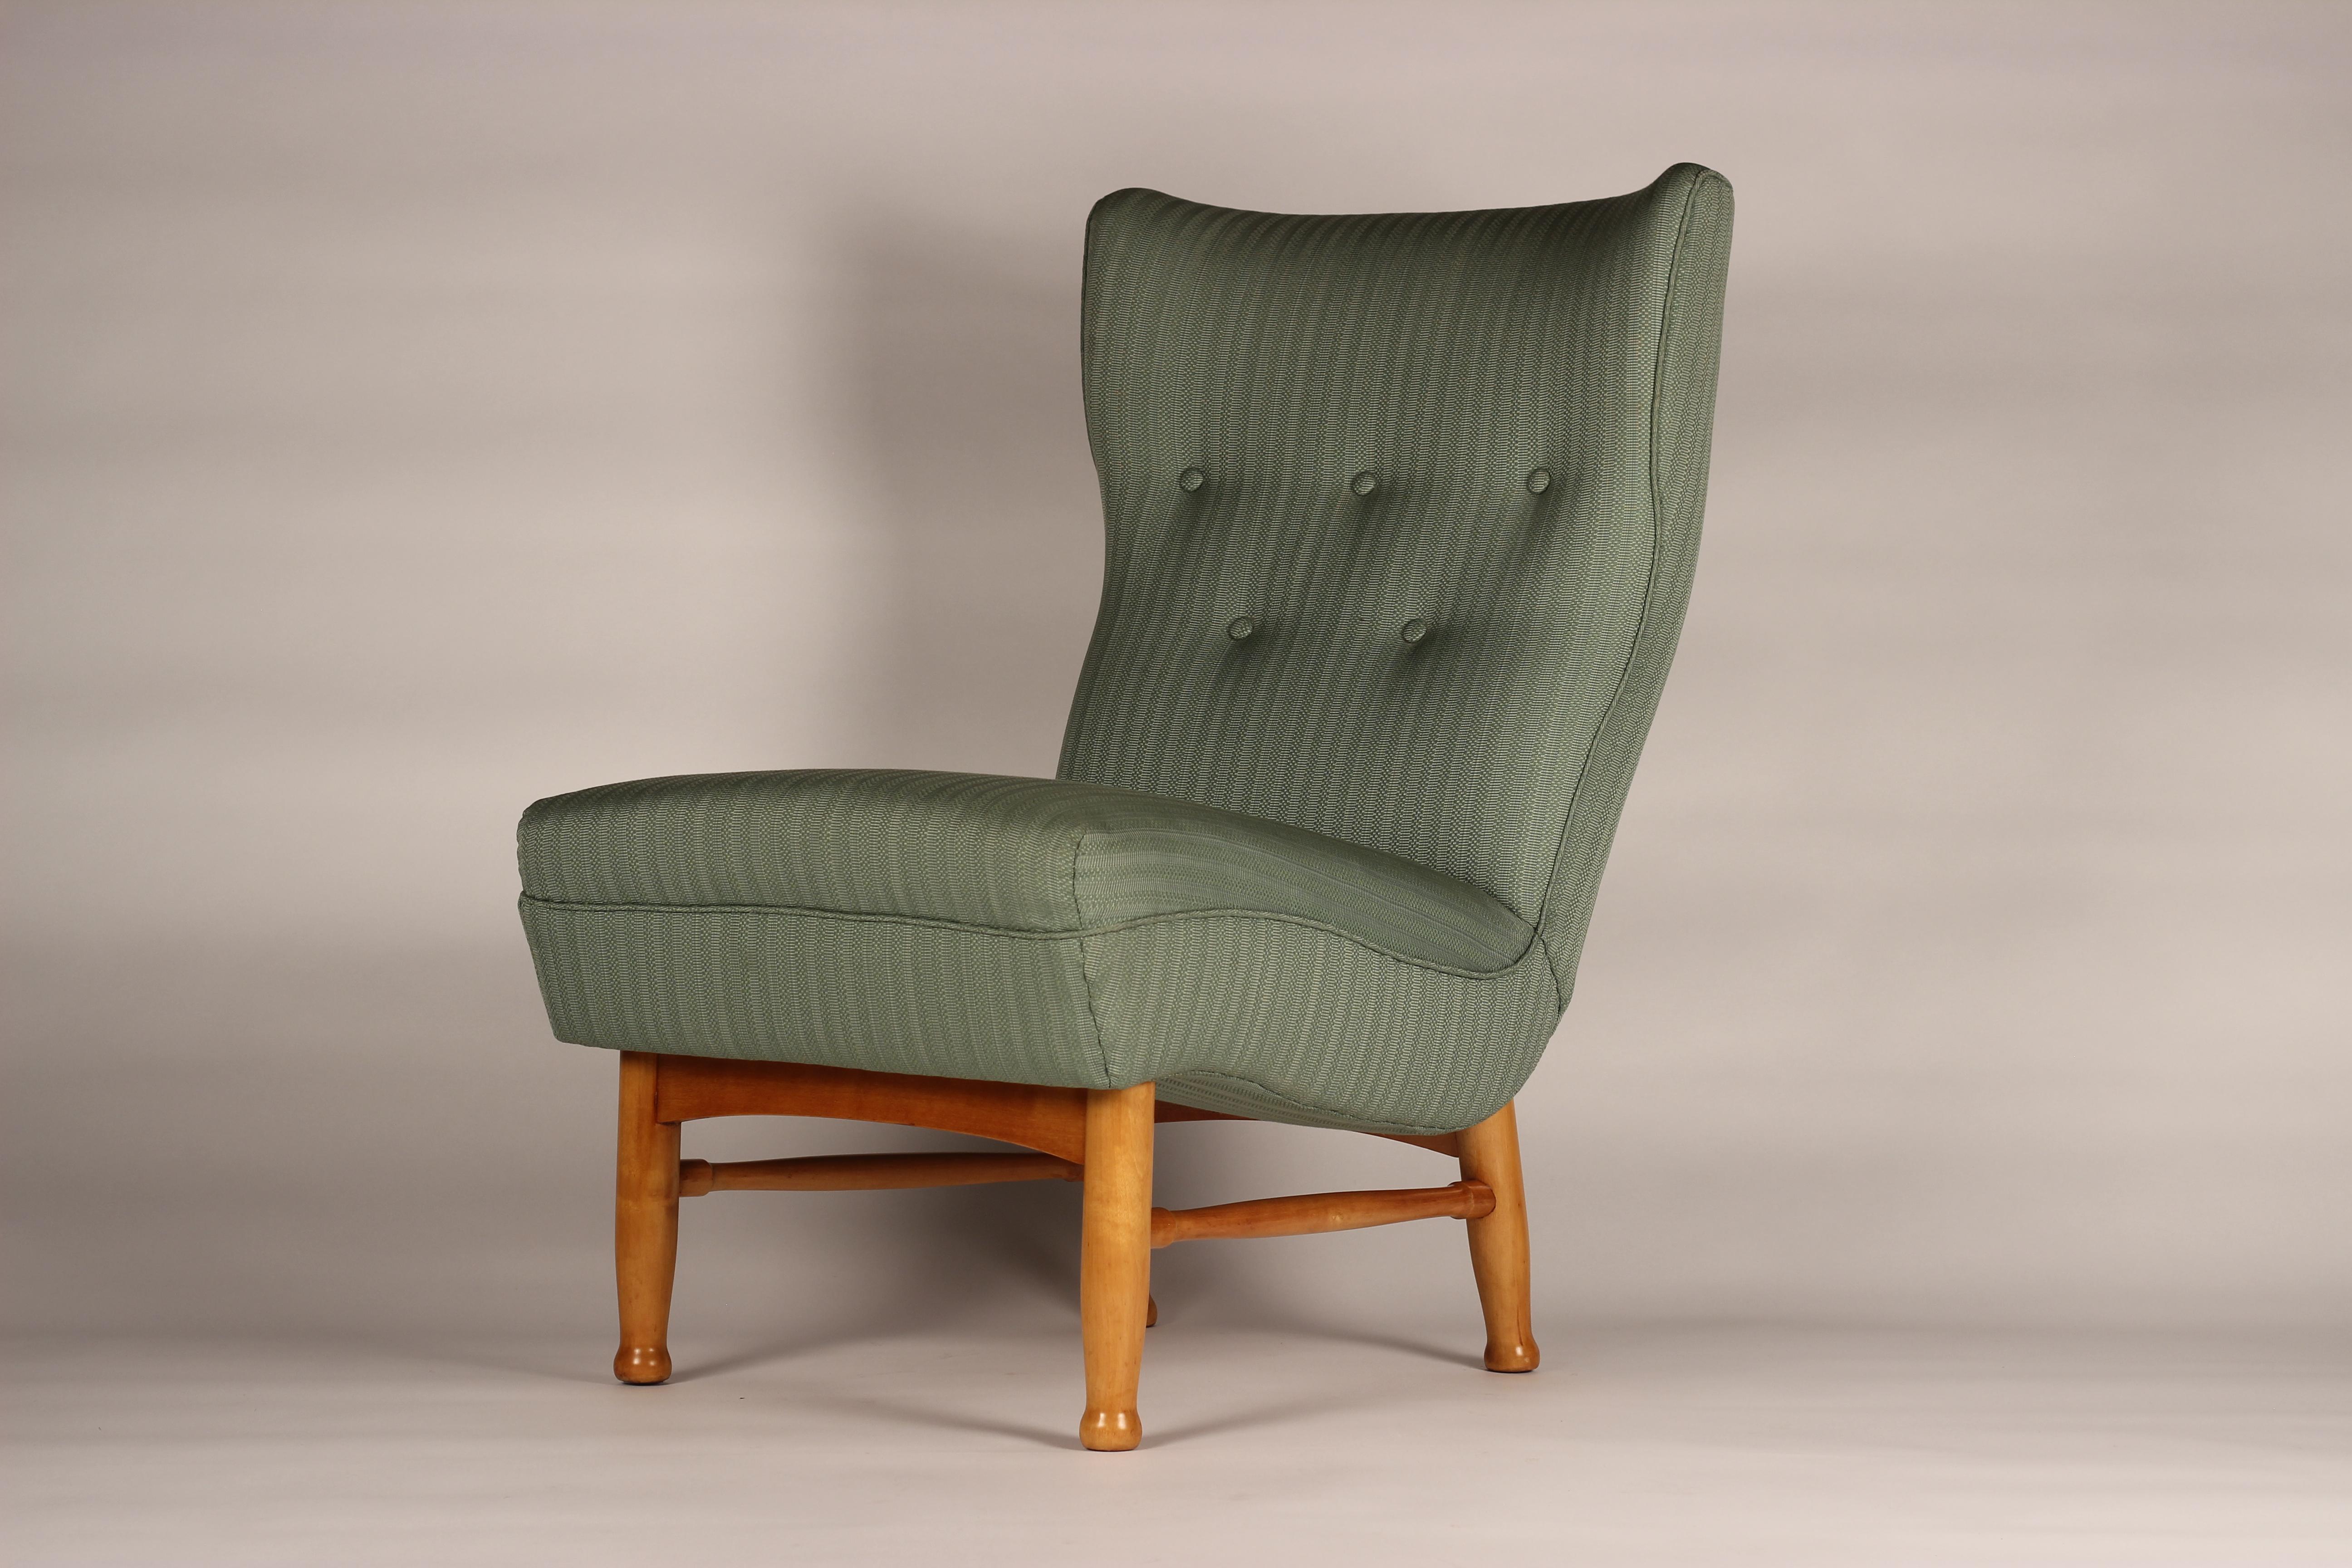 Scandinavian Modern Chair by Elias Svedberg for Nordiska Kompaniet Sweden 1950’s 4